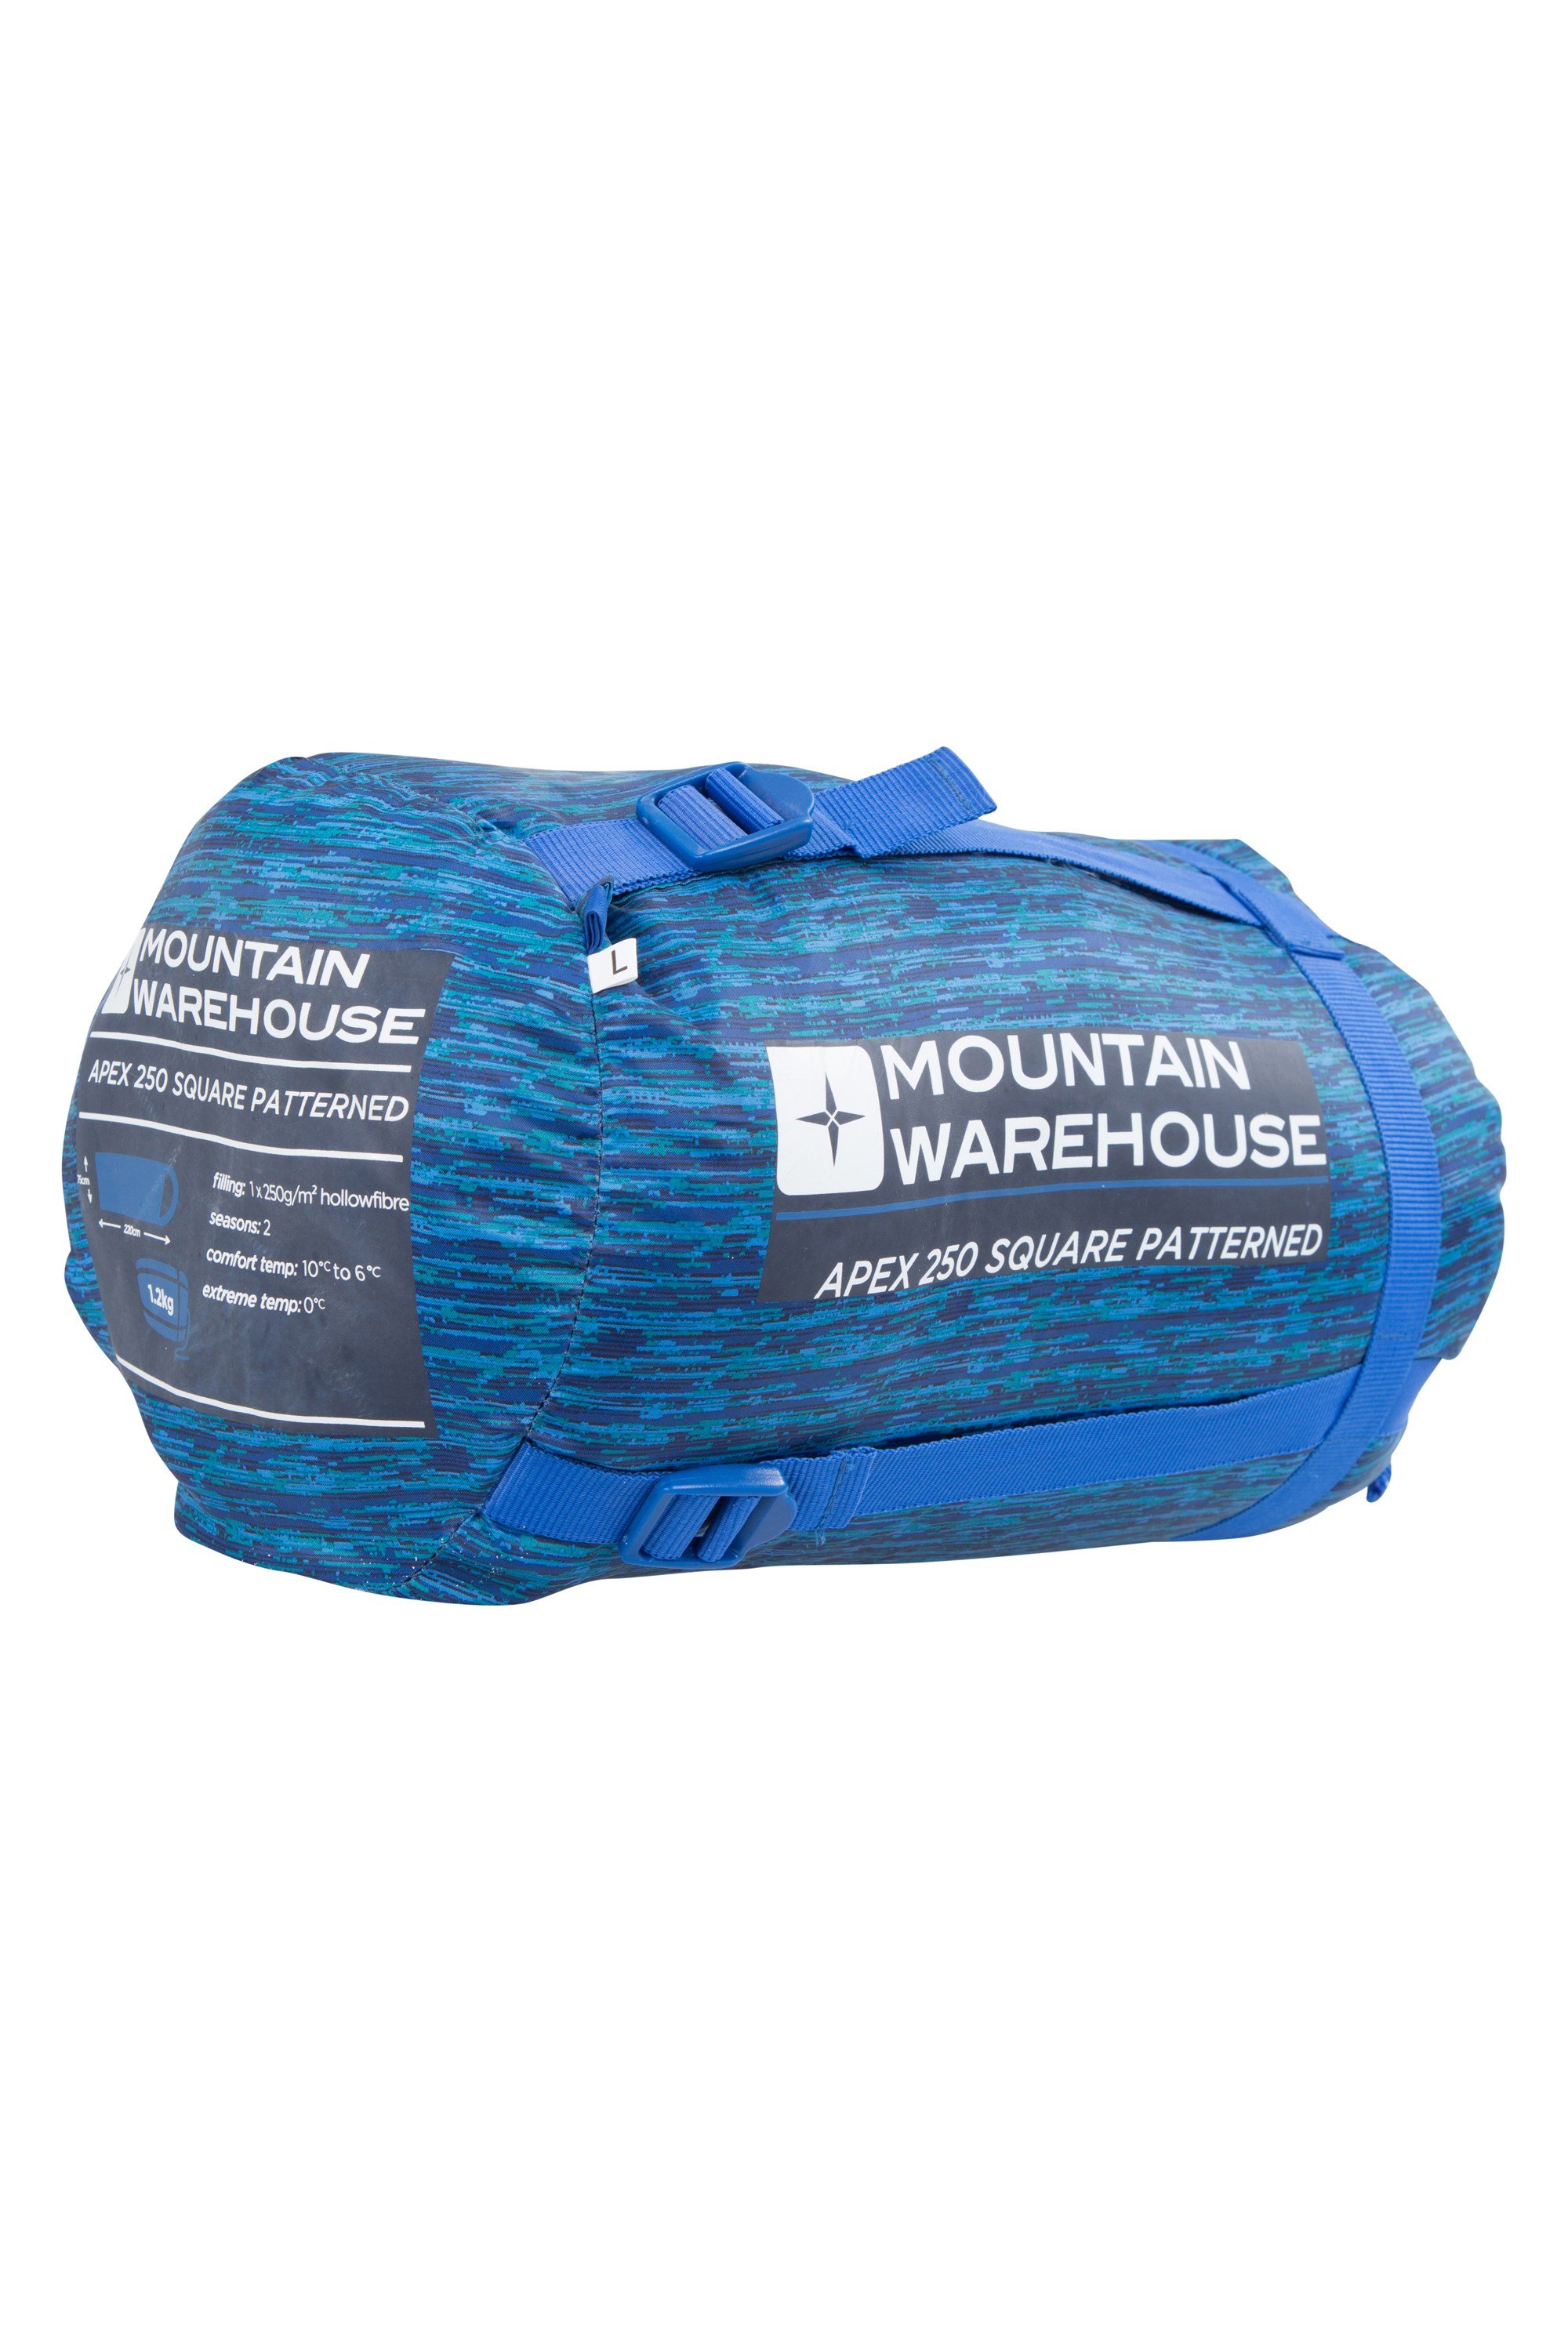 Apex 250 Square Sleeping Bag | Mountain Warehouse US